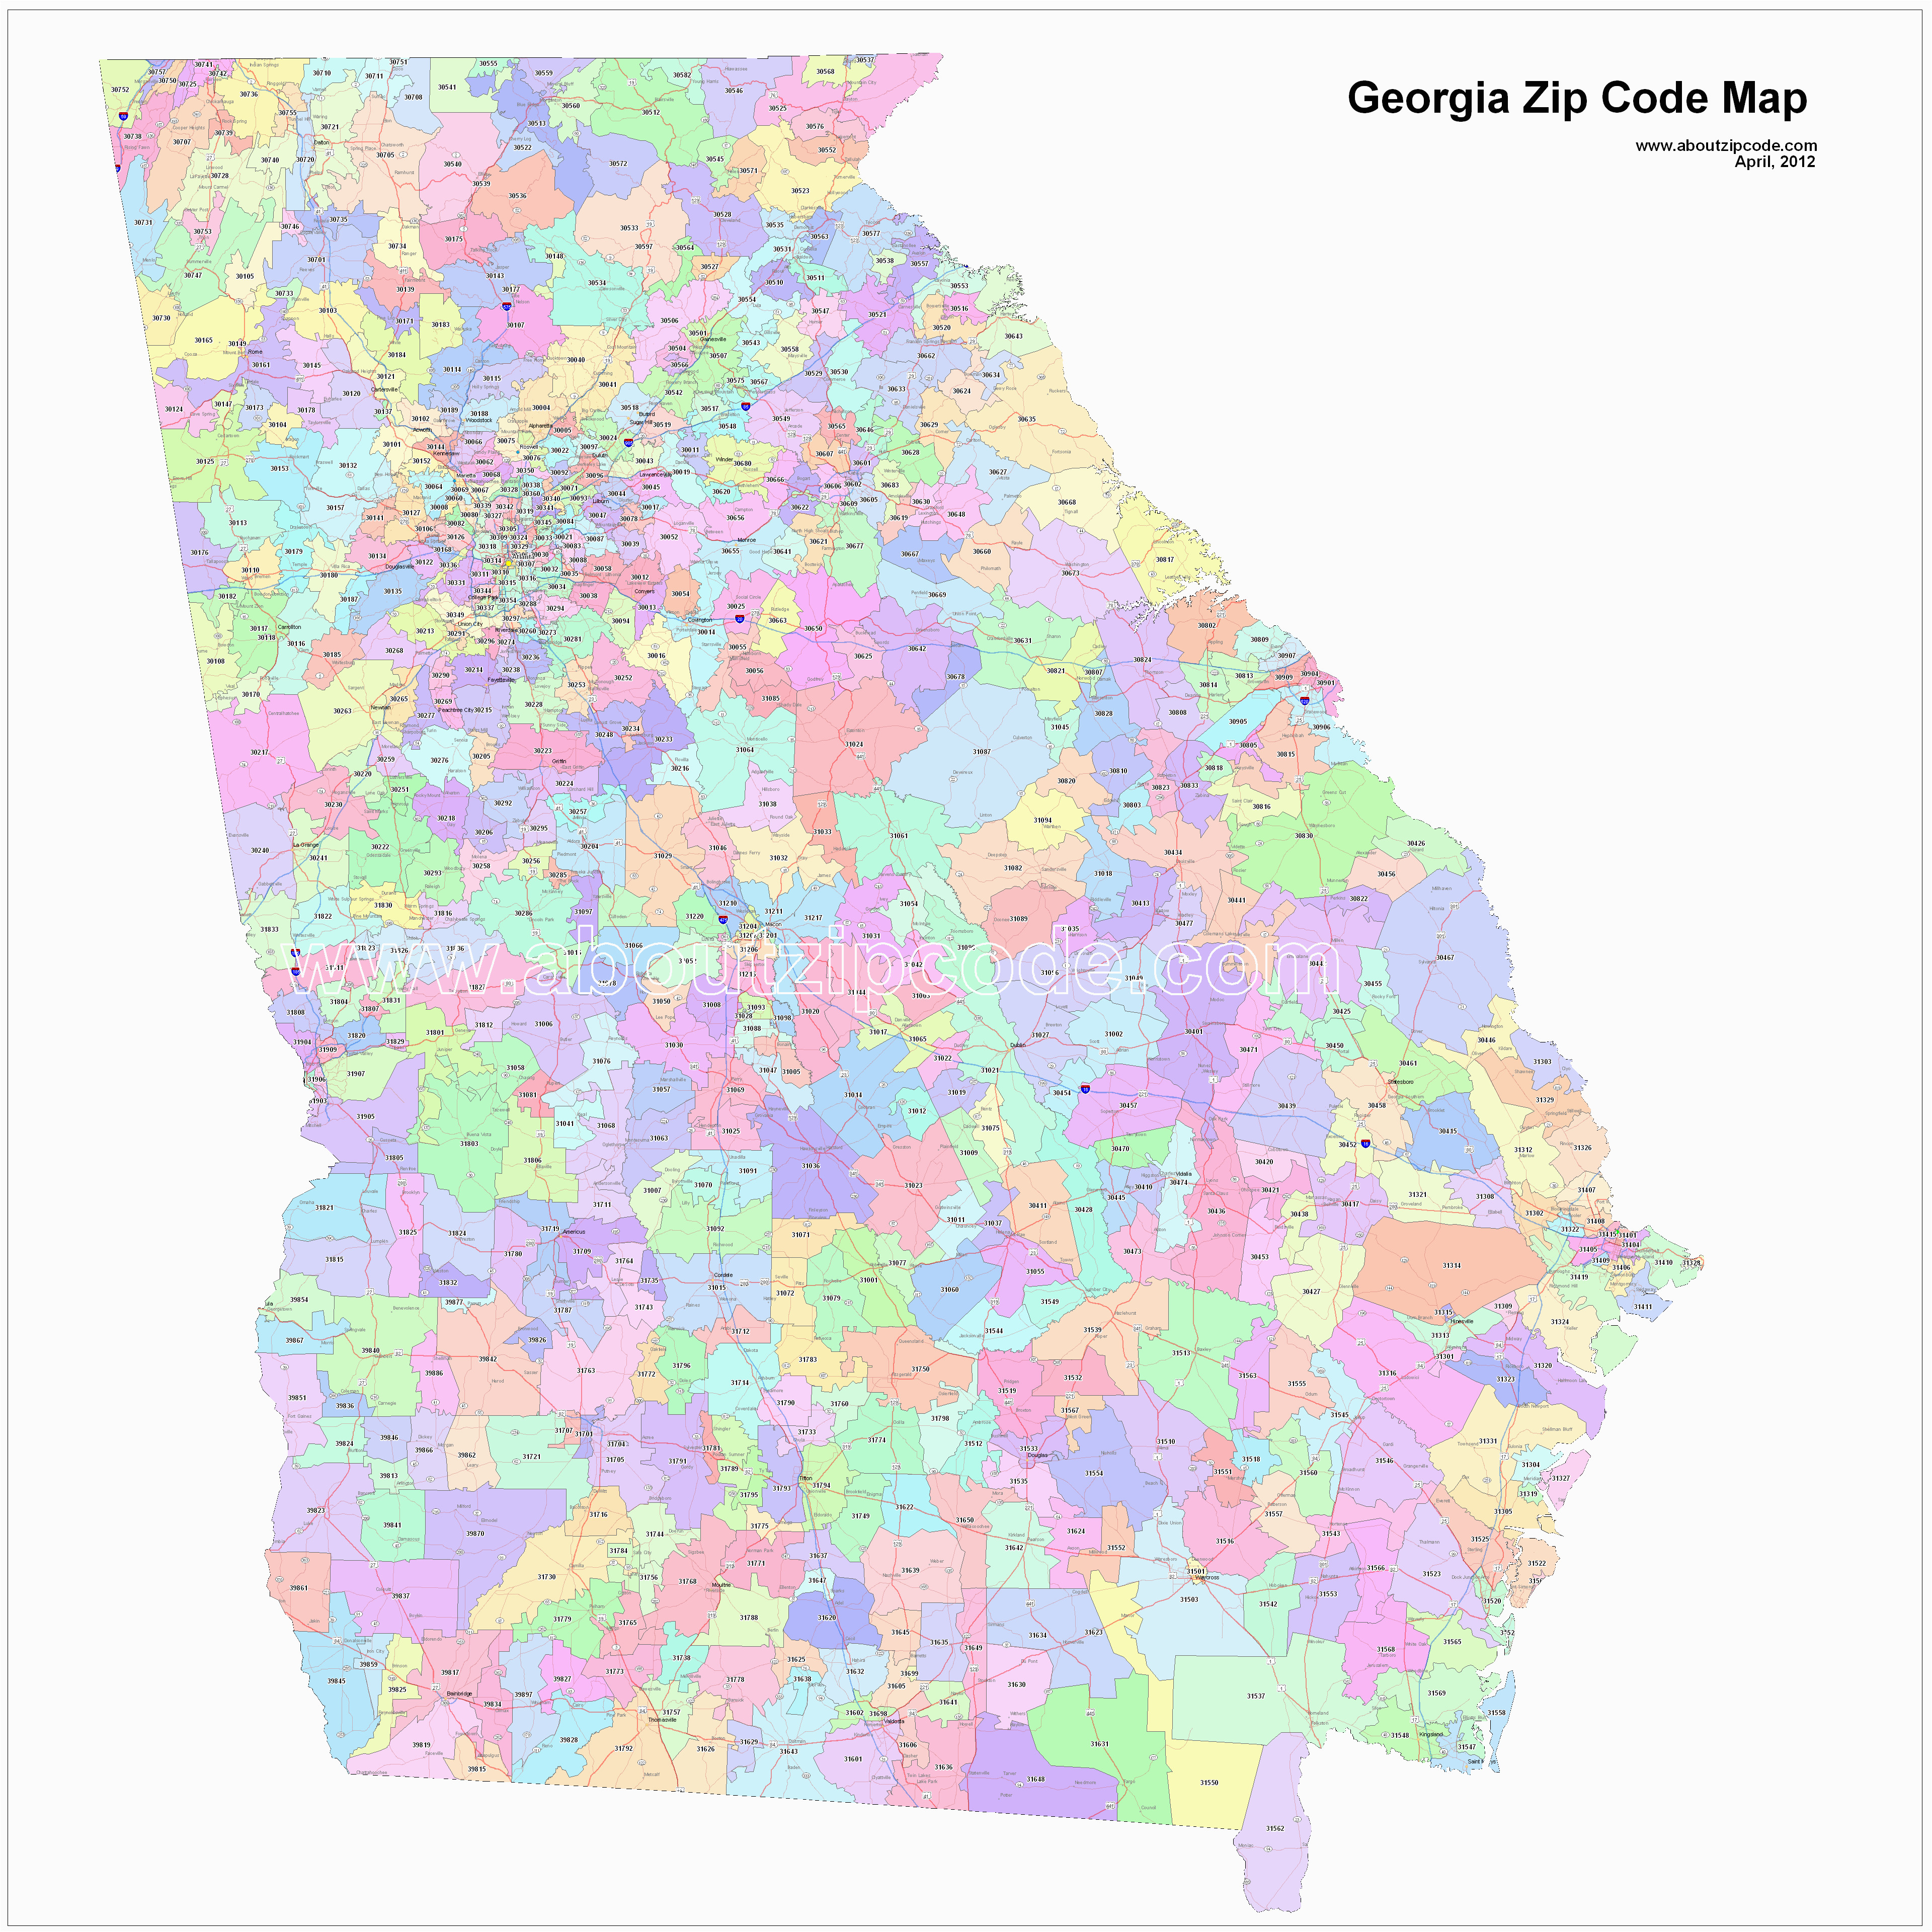 Georgia Zip Code Map Free Georgia Zip Code Maps Free Georgia Zip Code Maps